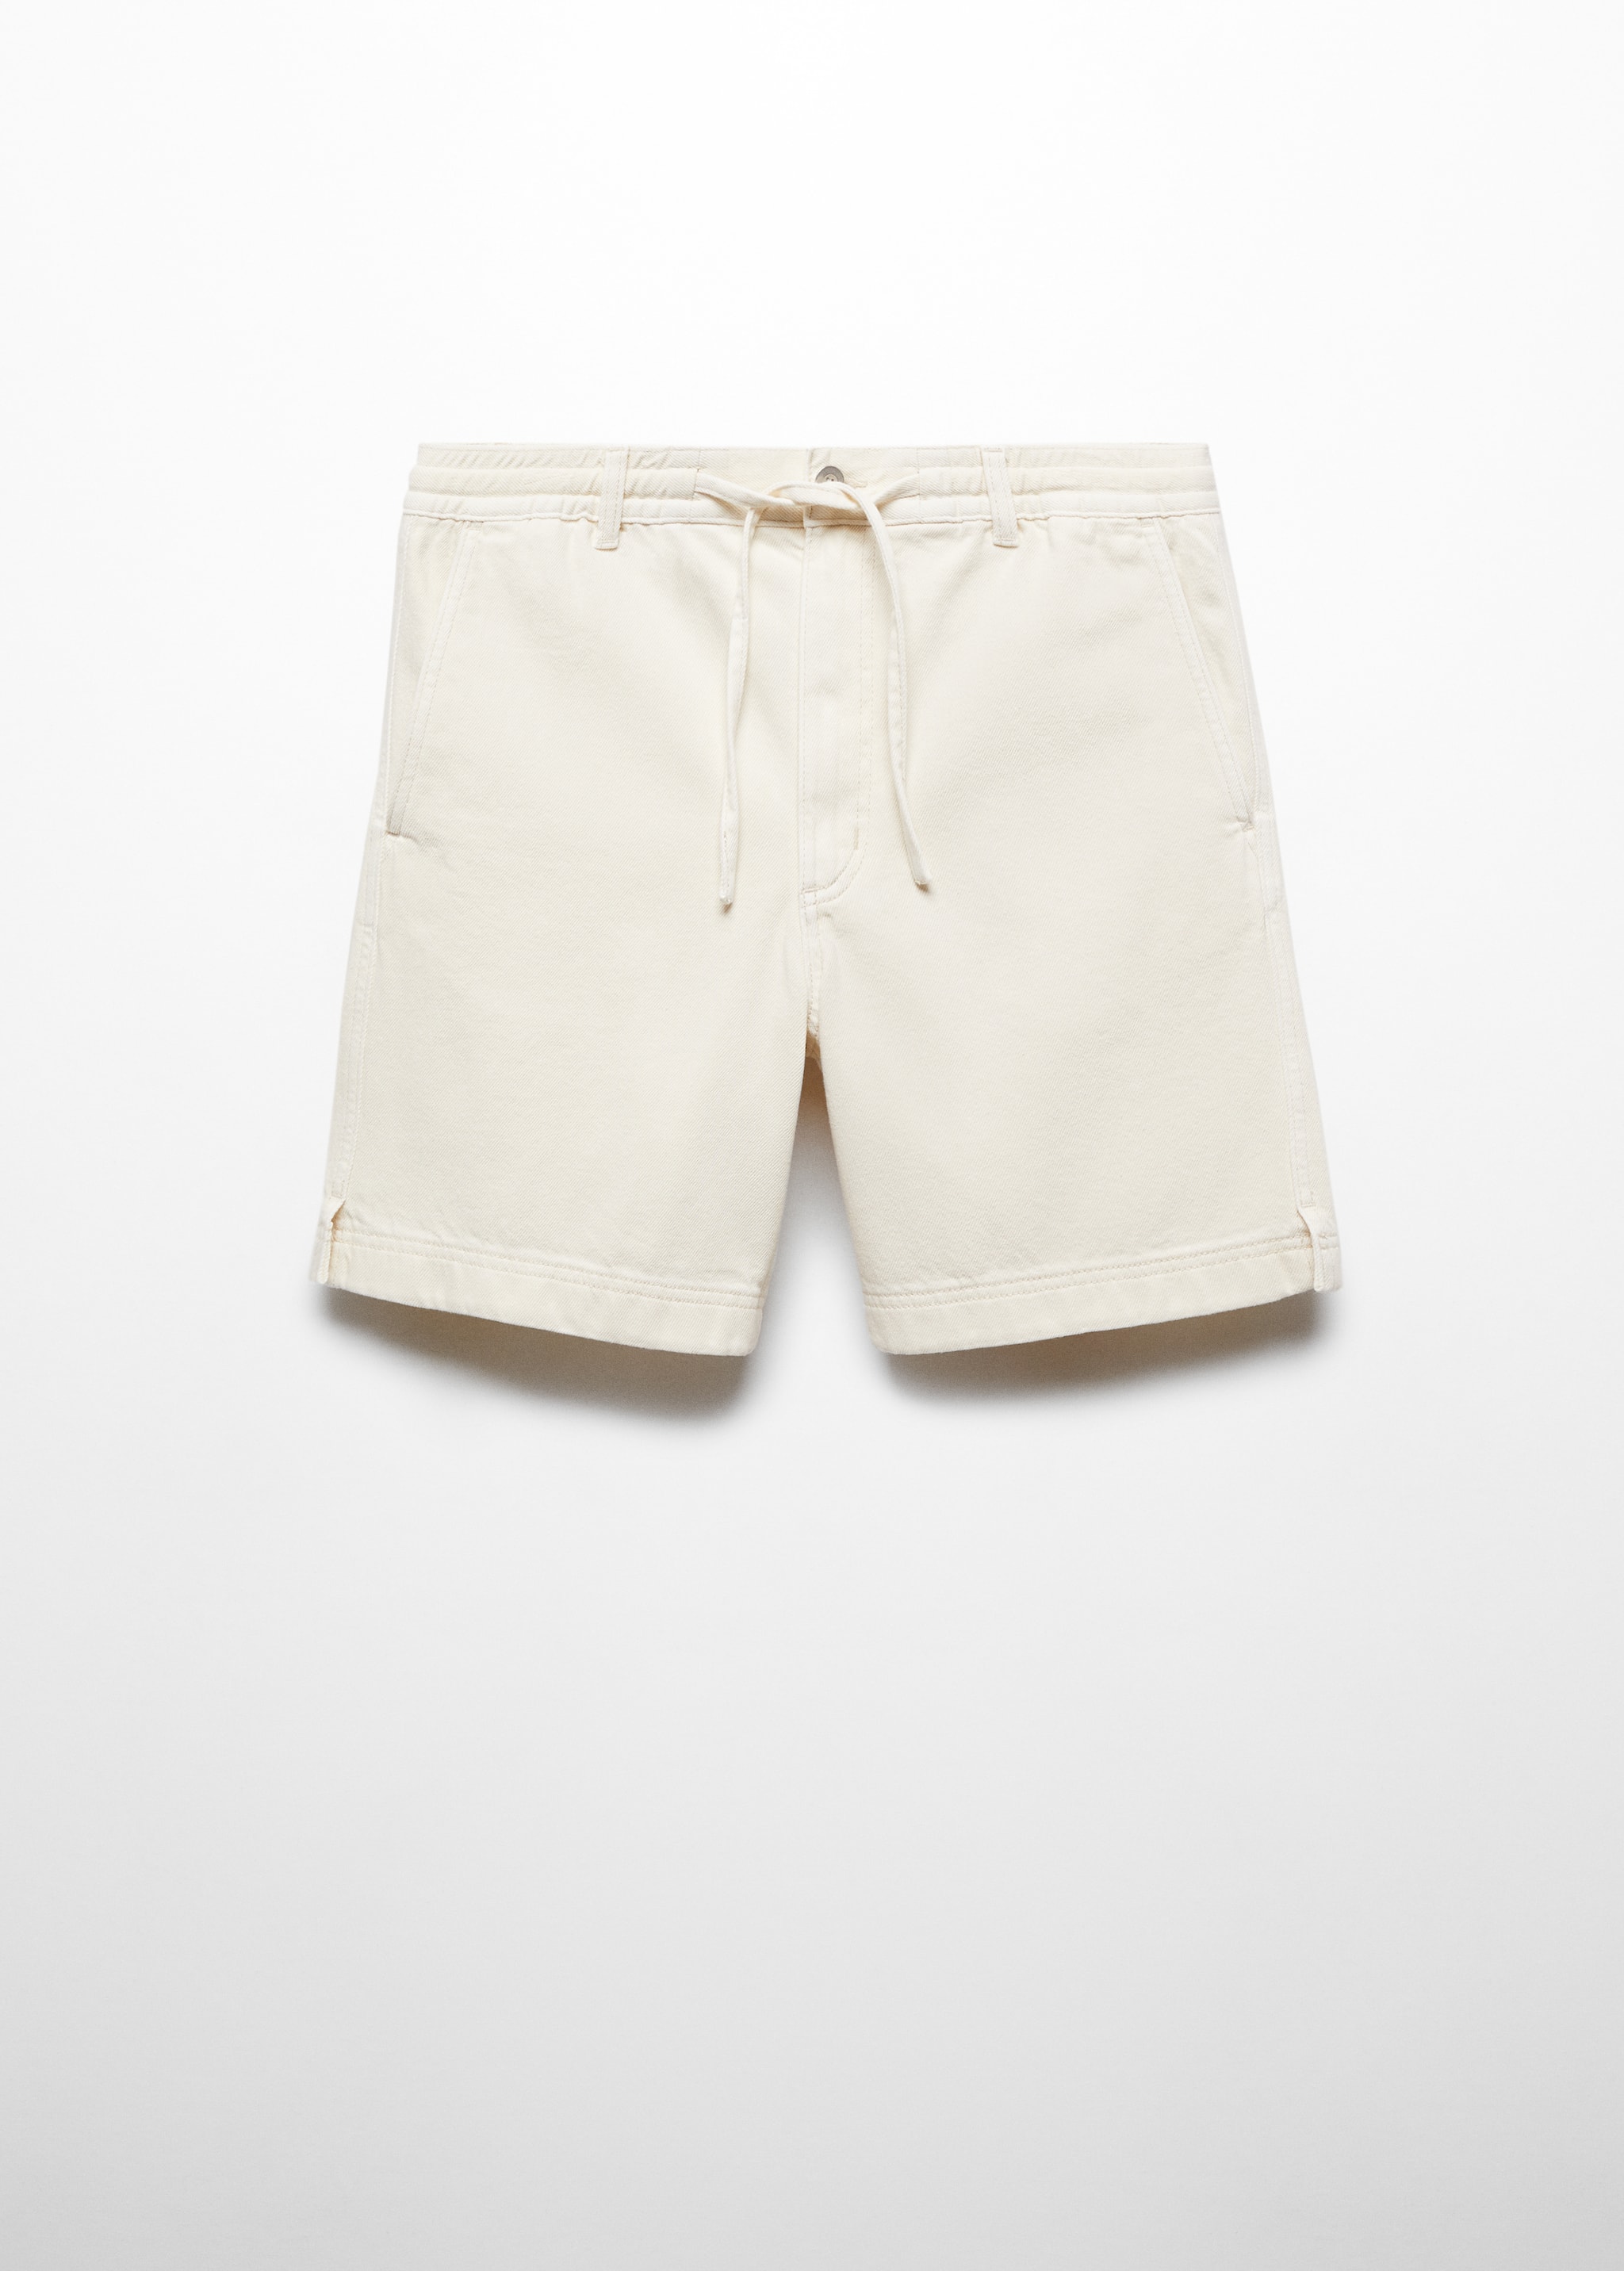 100% cotton drawstring Bermuda shorts - Article without model